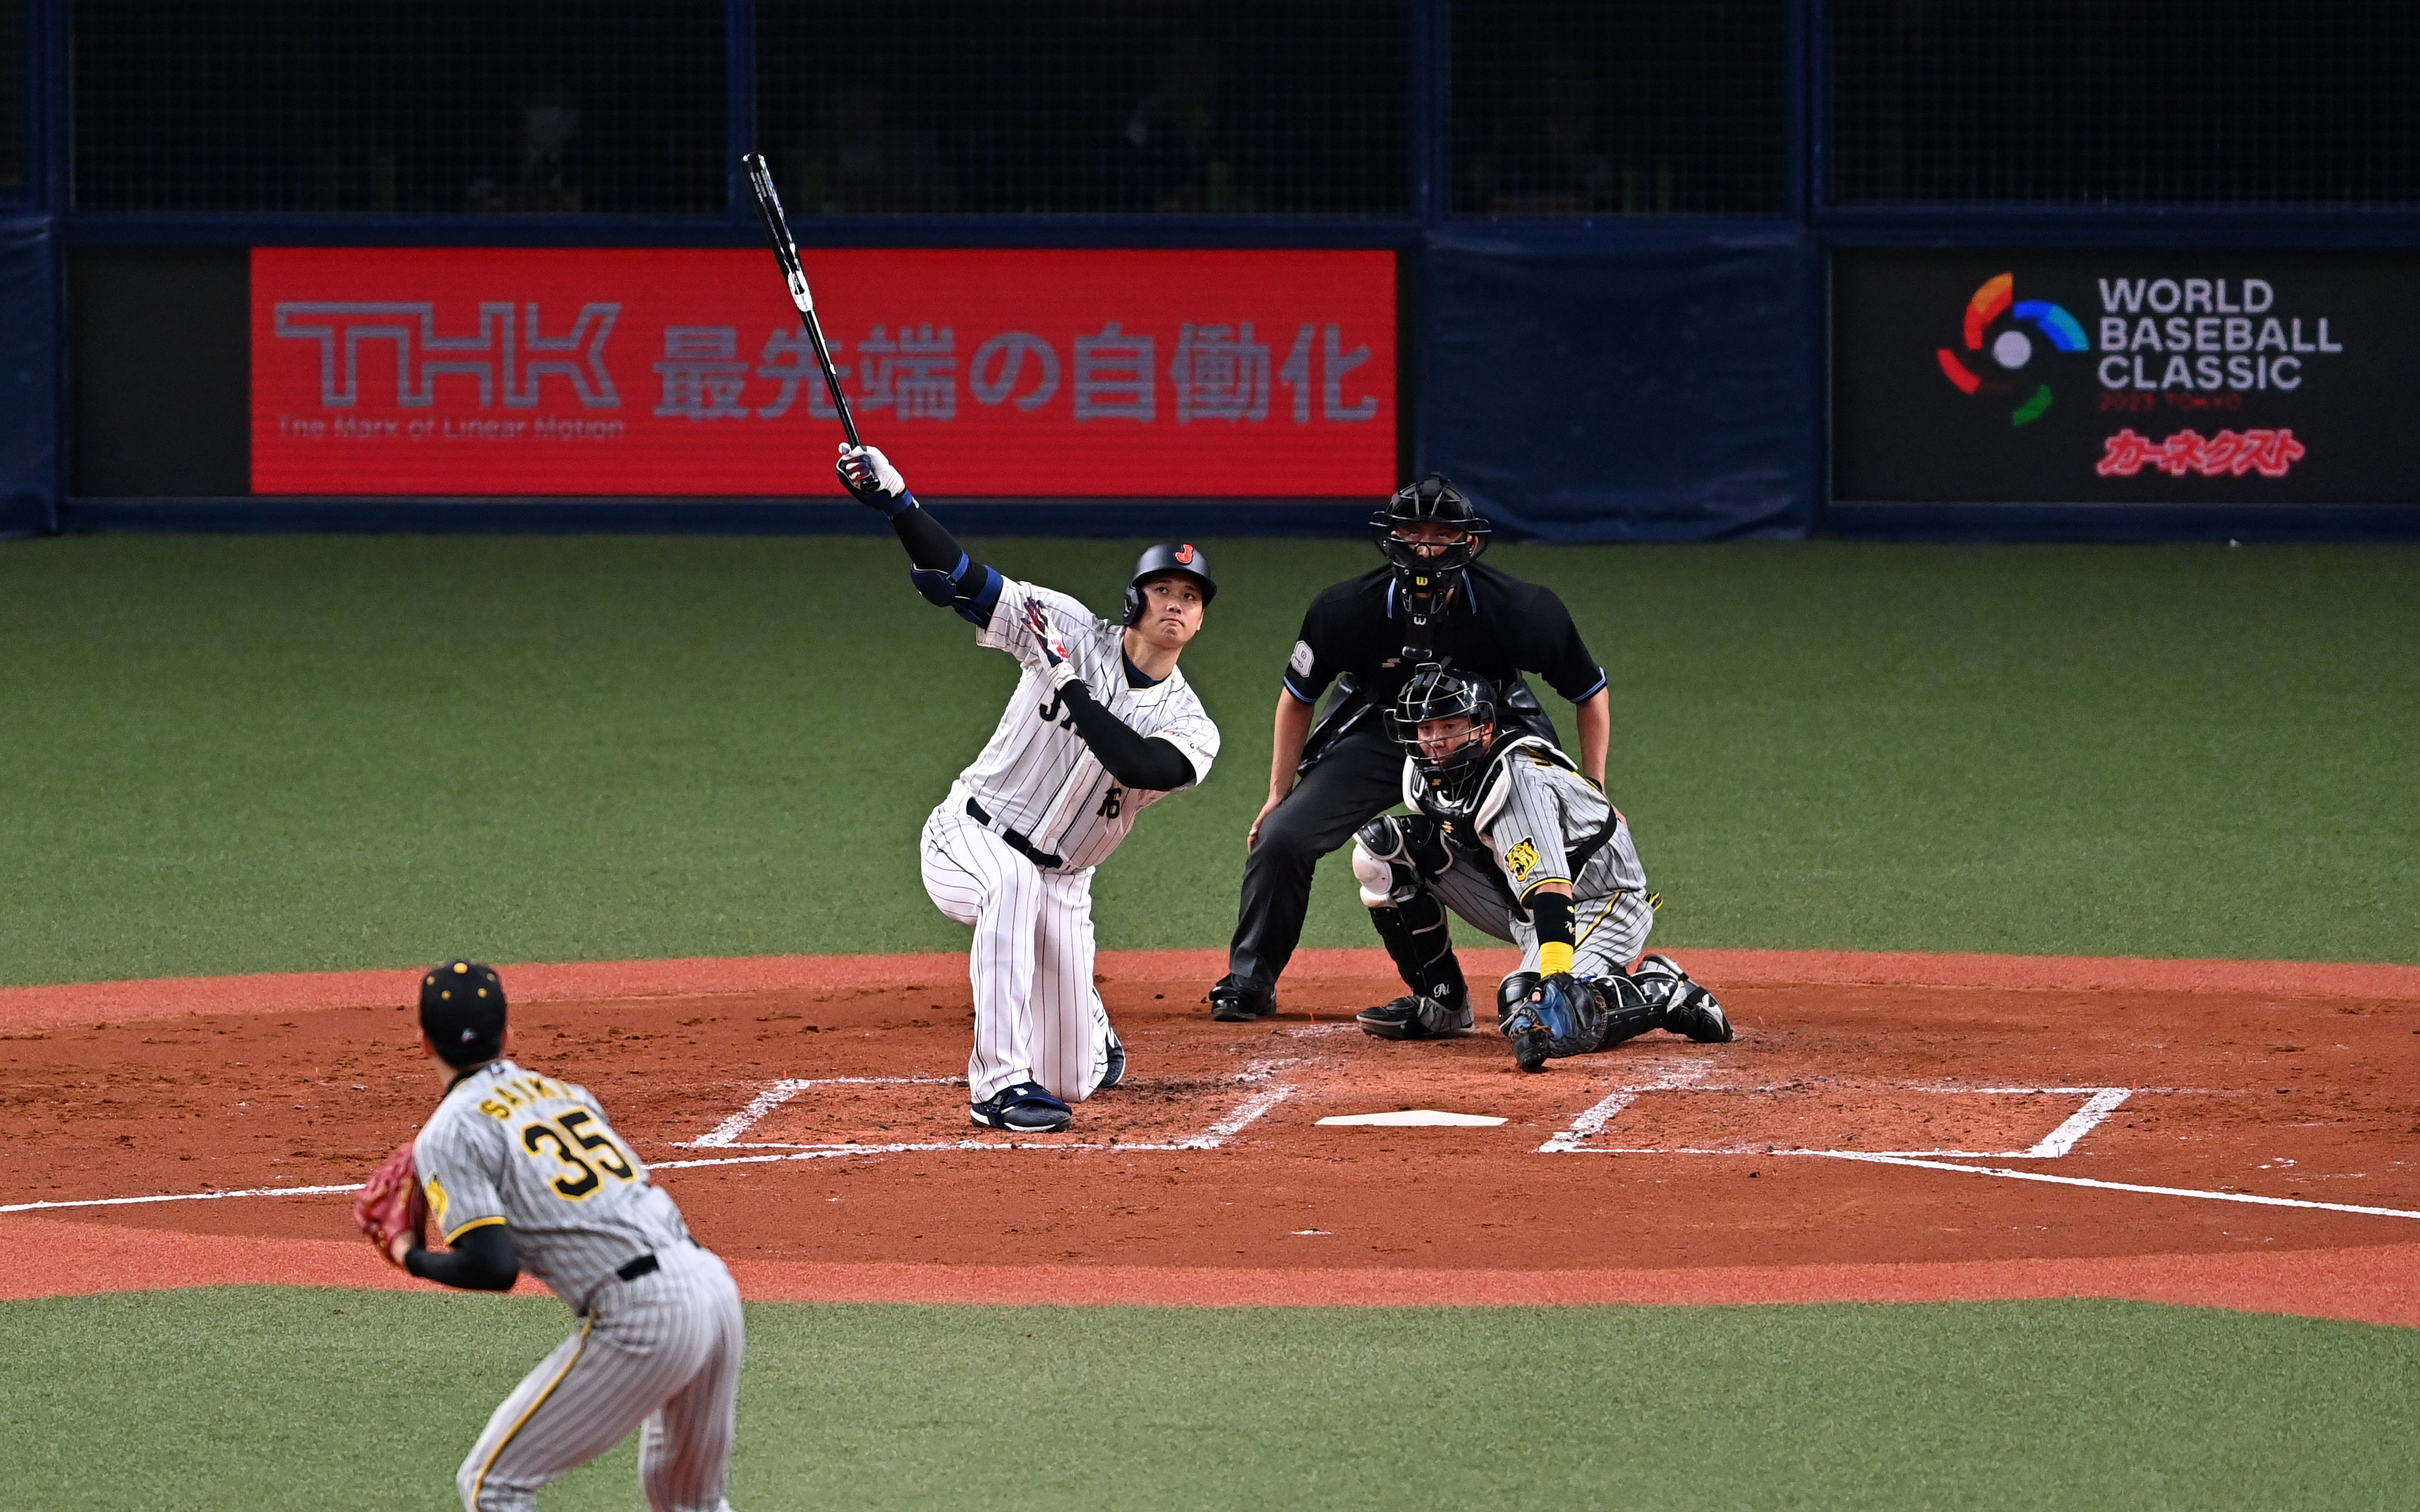 VIDEO: Shohei Ohtani Home Run Bat Crack Was Really Loud